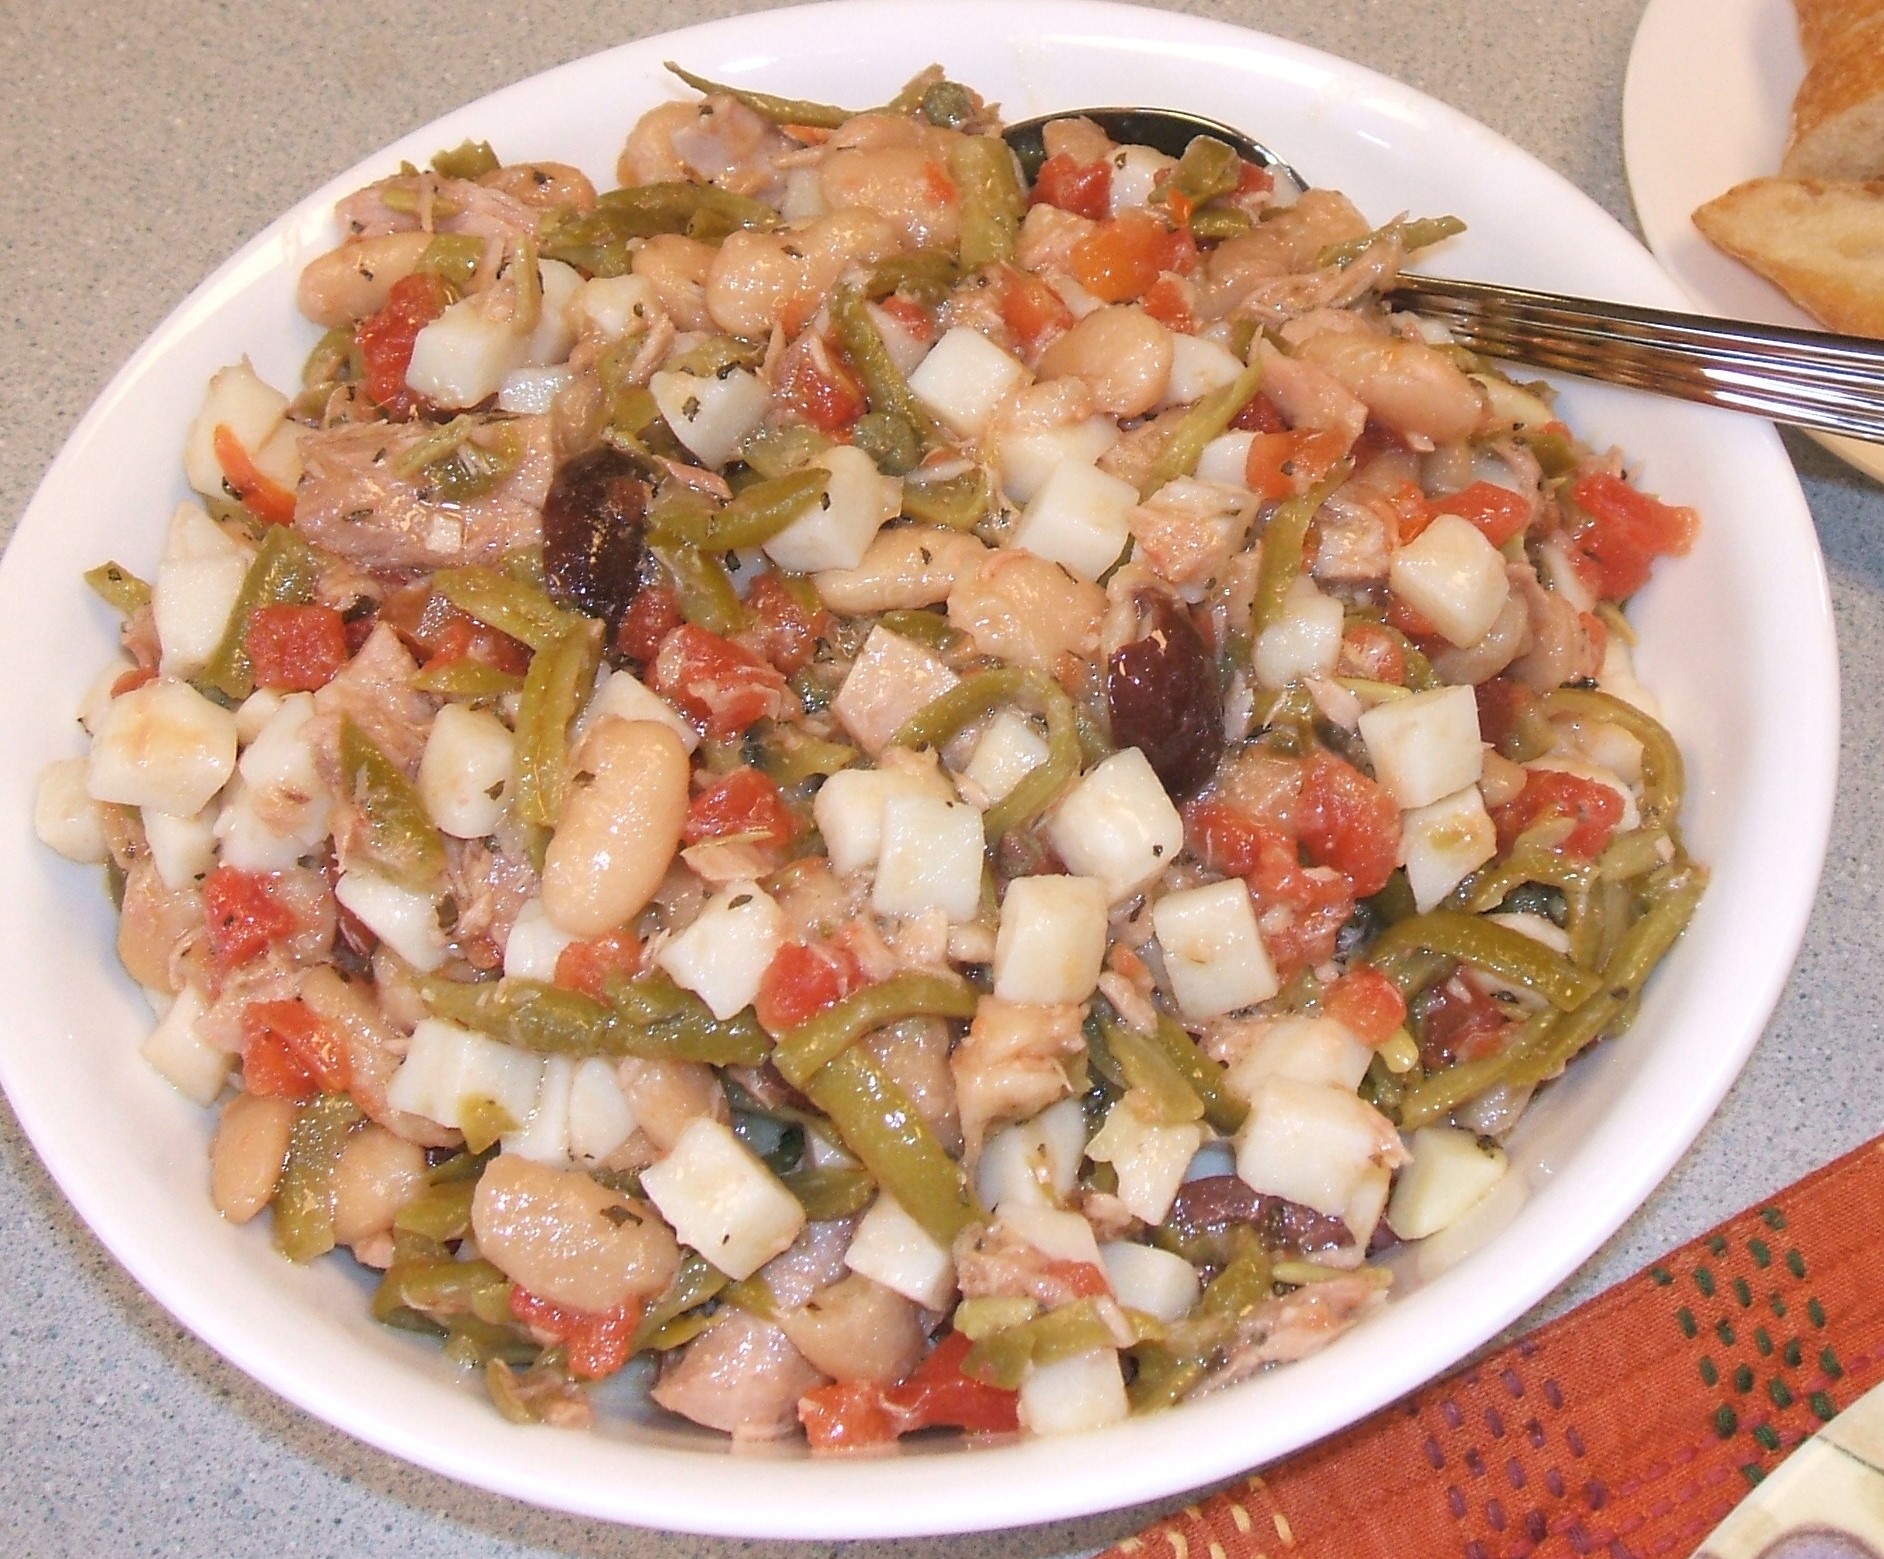 A serving bowl of Salad Nicoise